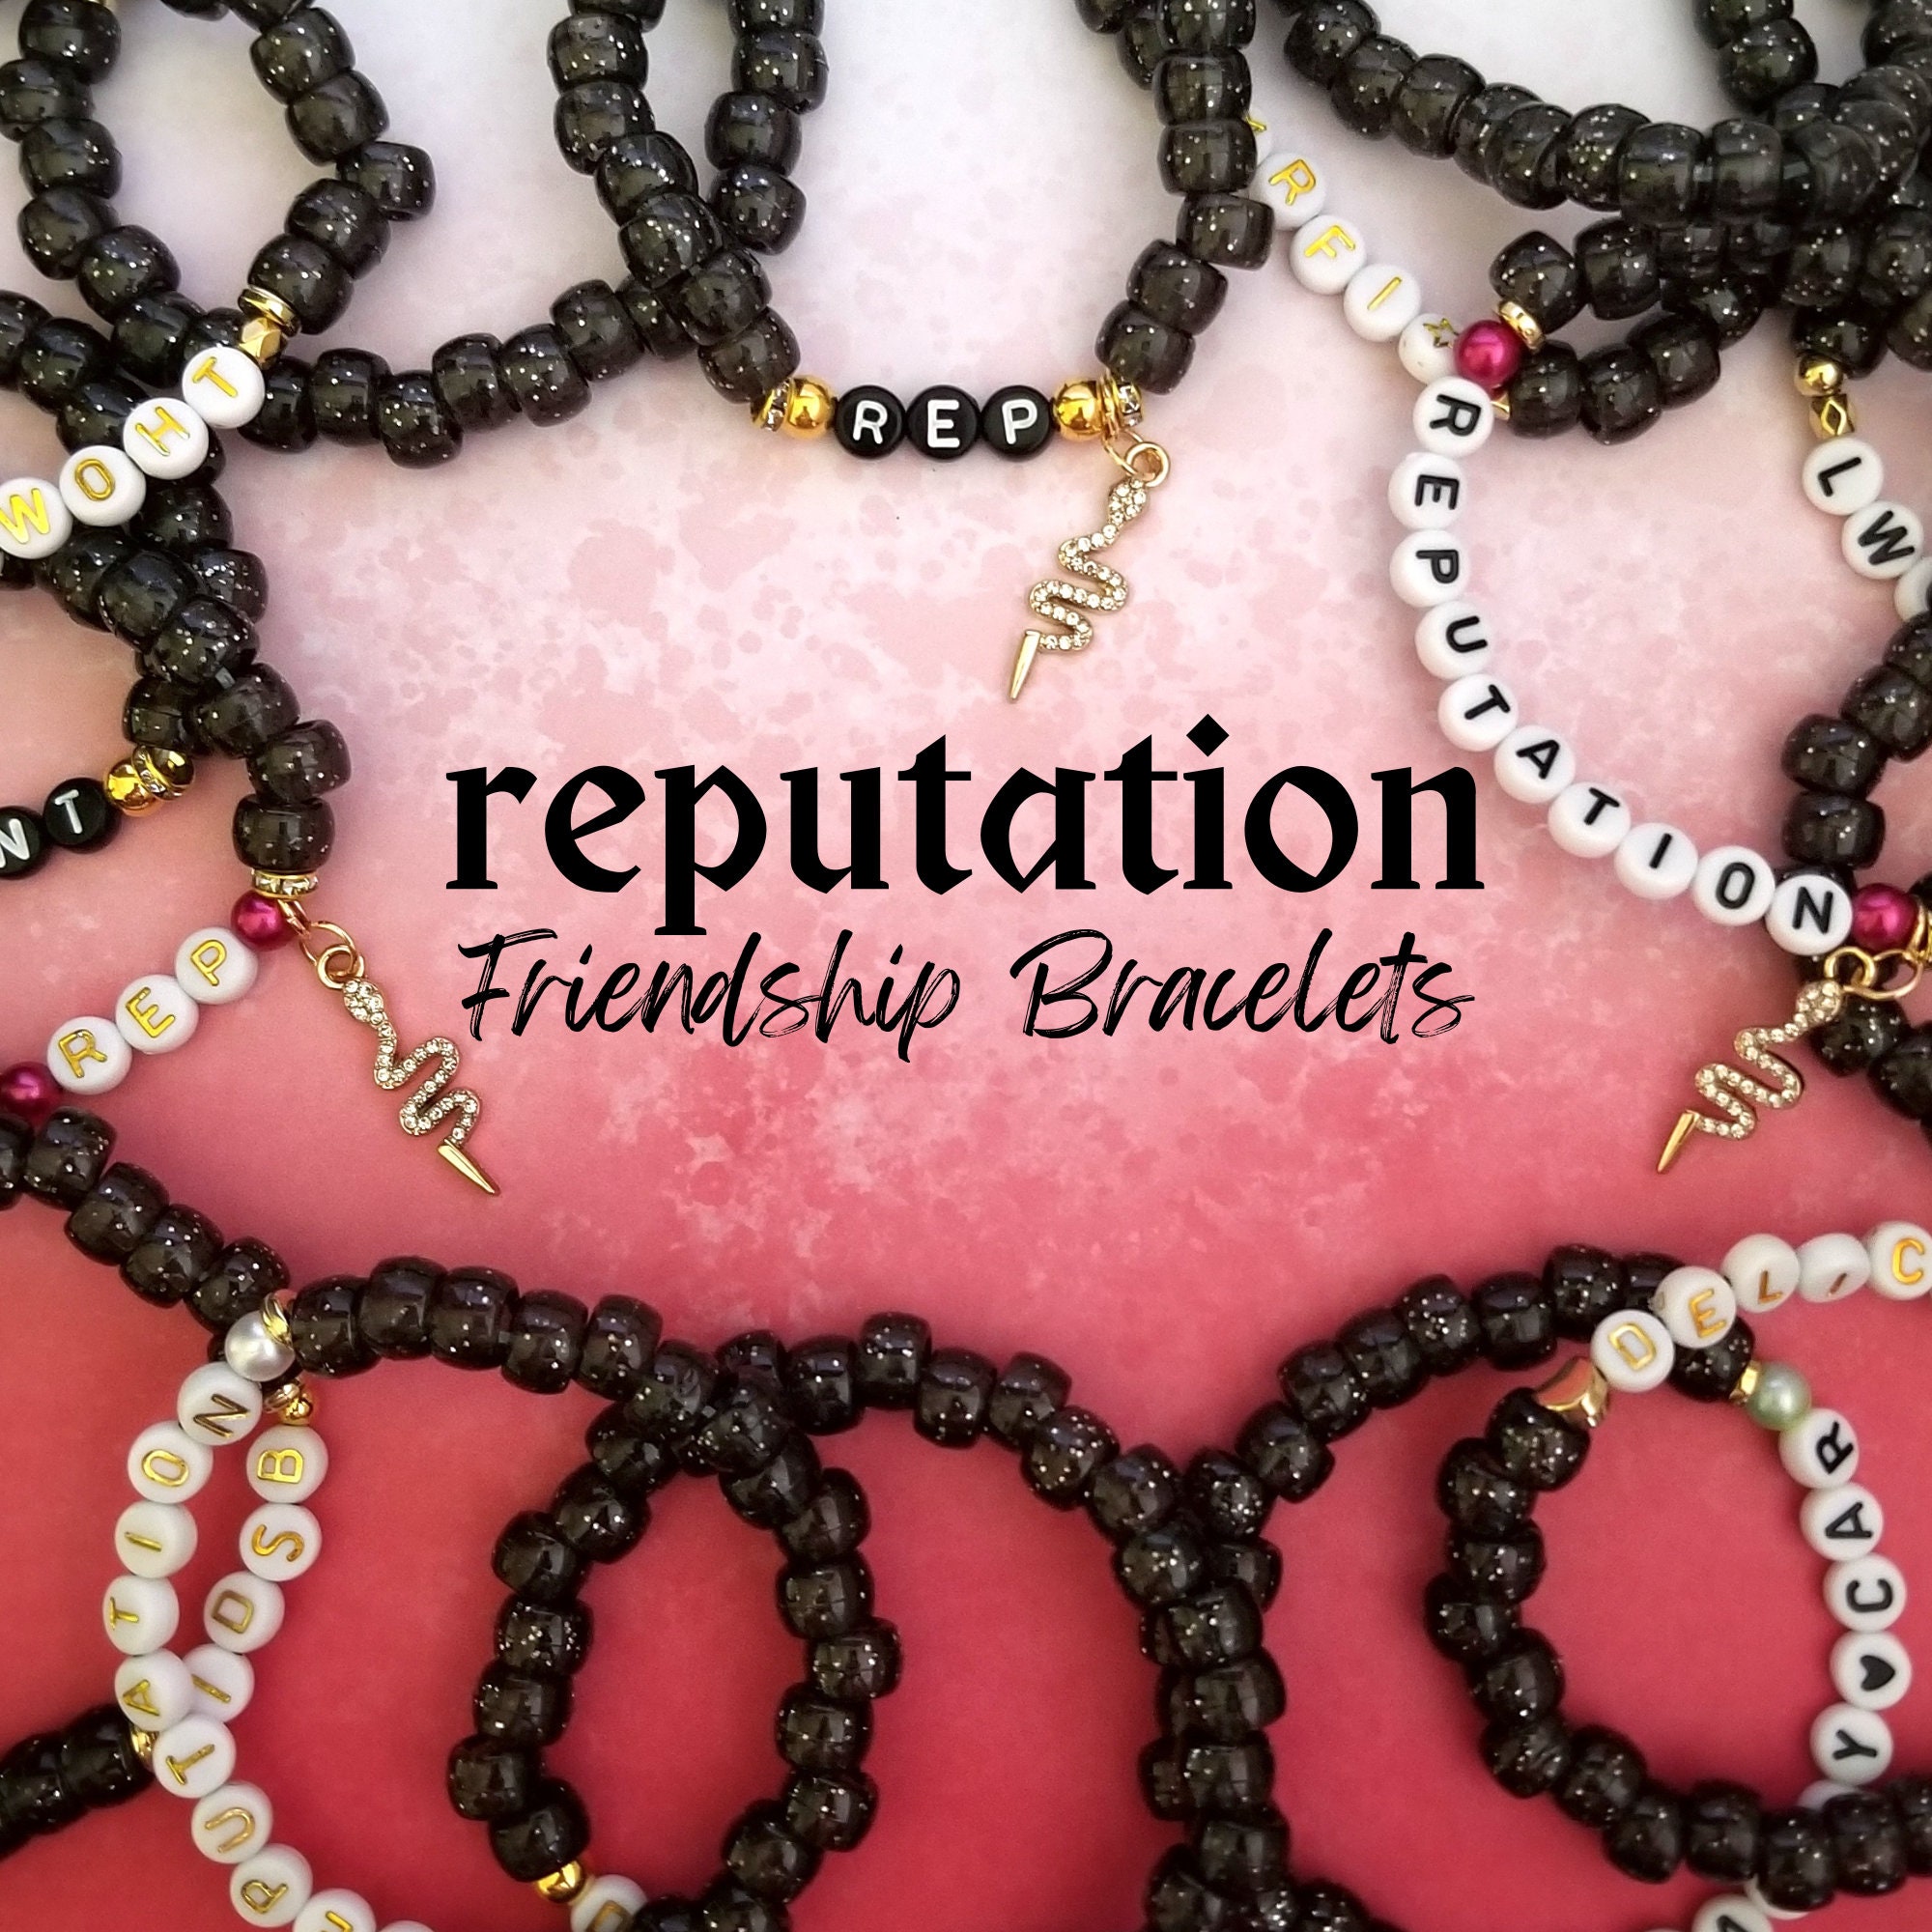 Deluxe Friendship Bracelet Kit: Eras Tour Bracelet Trade, Kandi Bracelets,  Assorted Beads, DIY Beaded Bracelets, Adult Friendship Bracelets 